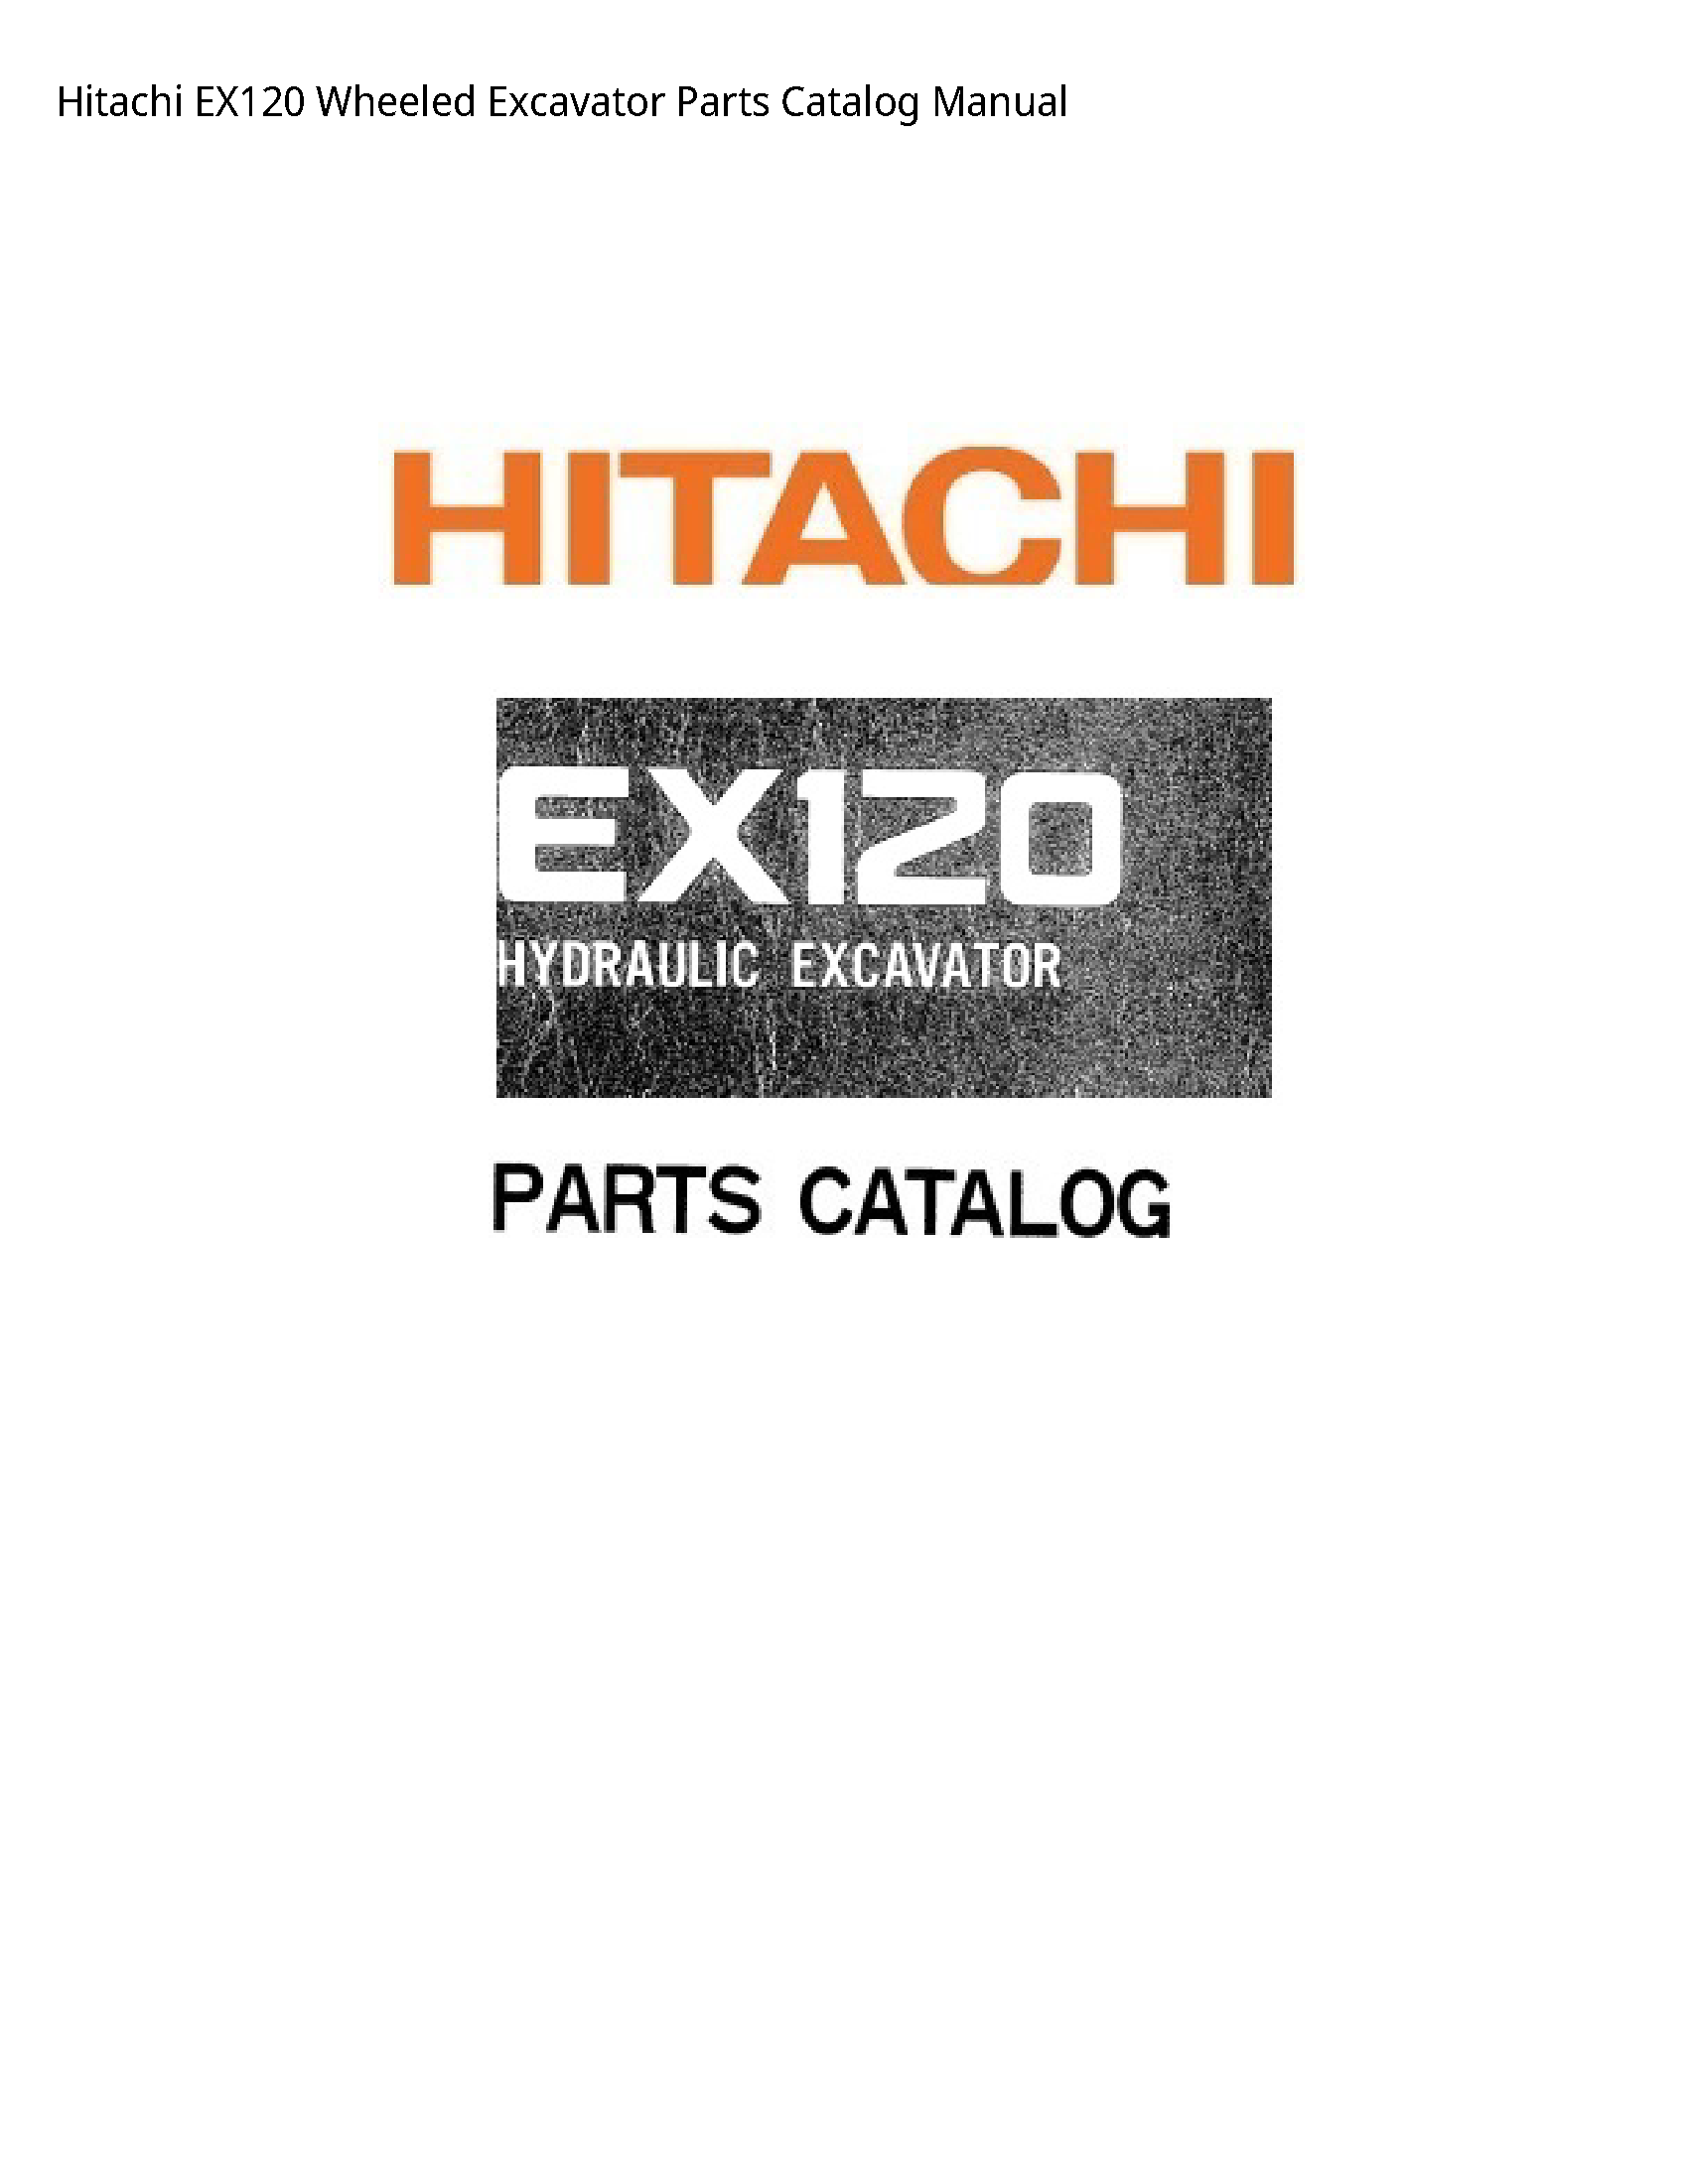 Hitachi EX120 Wheeled Excavator Parts Catalog manual